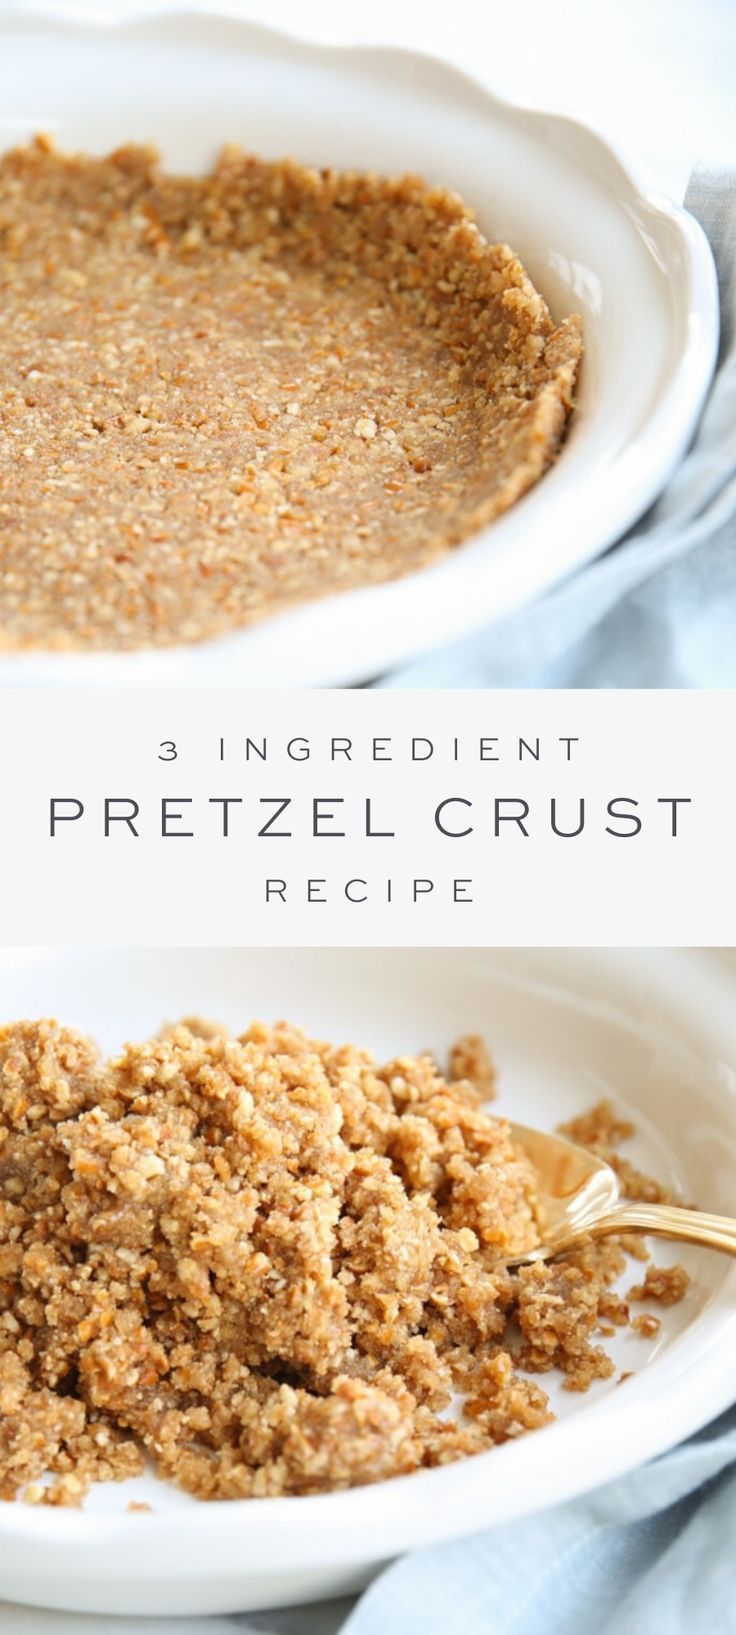 Pretzel Crust Recipe for Pie and Dessert -   19 desserts Sweets simple ideas